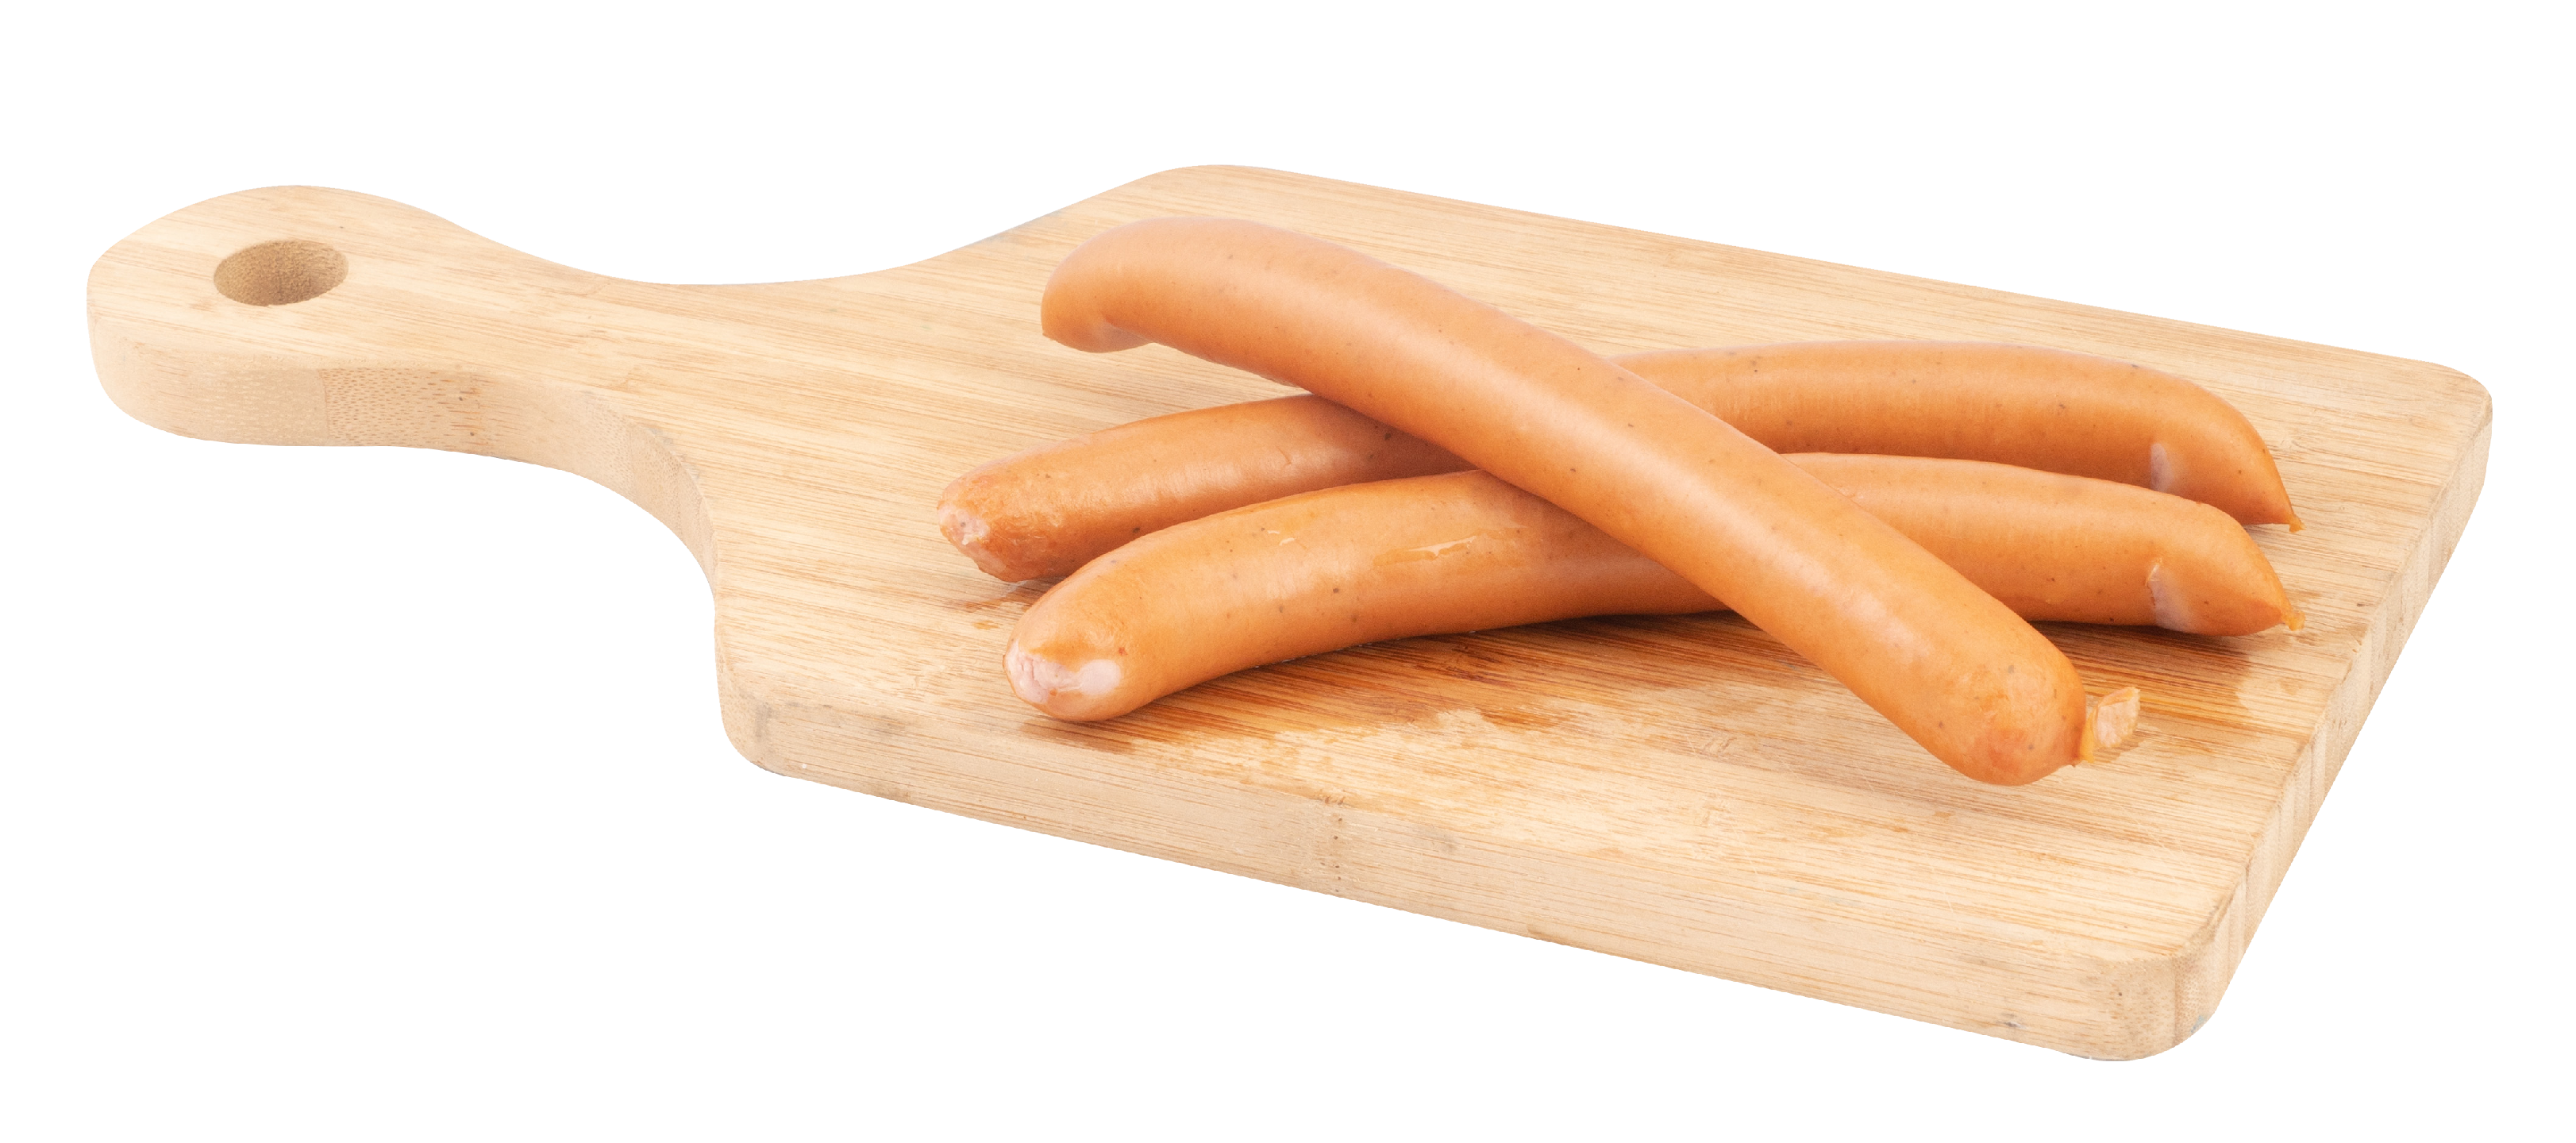 Sibylla 80x60g Suomalainen Hotdog-nakki pakaste